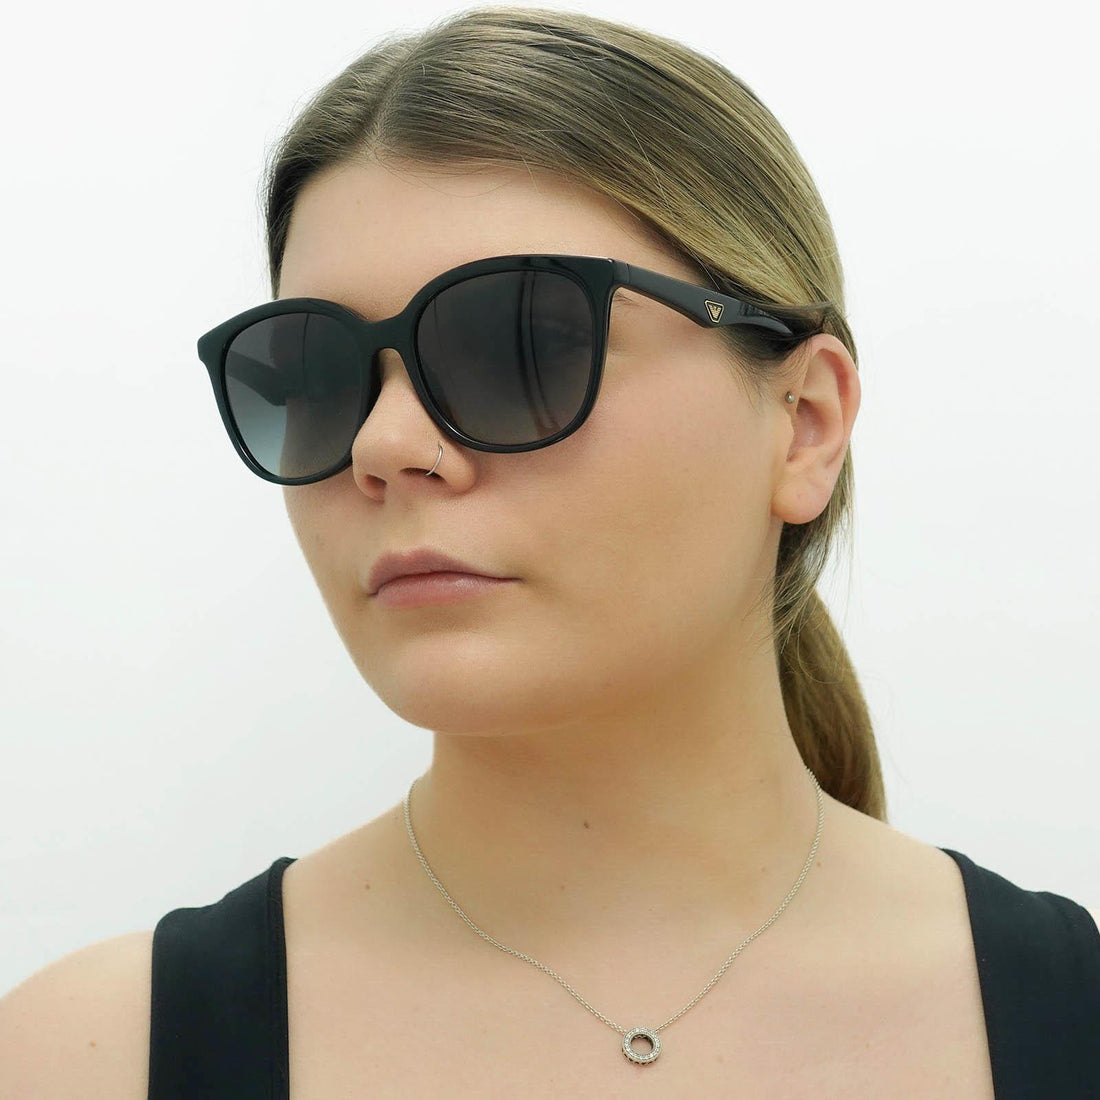 Emporio Armani Sunglasses EA4157 50178G Black Grey Gradient